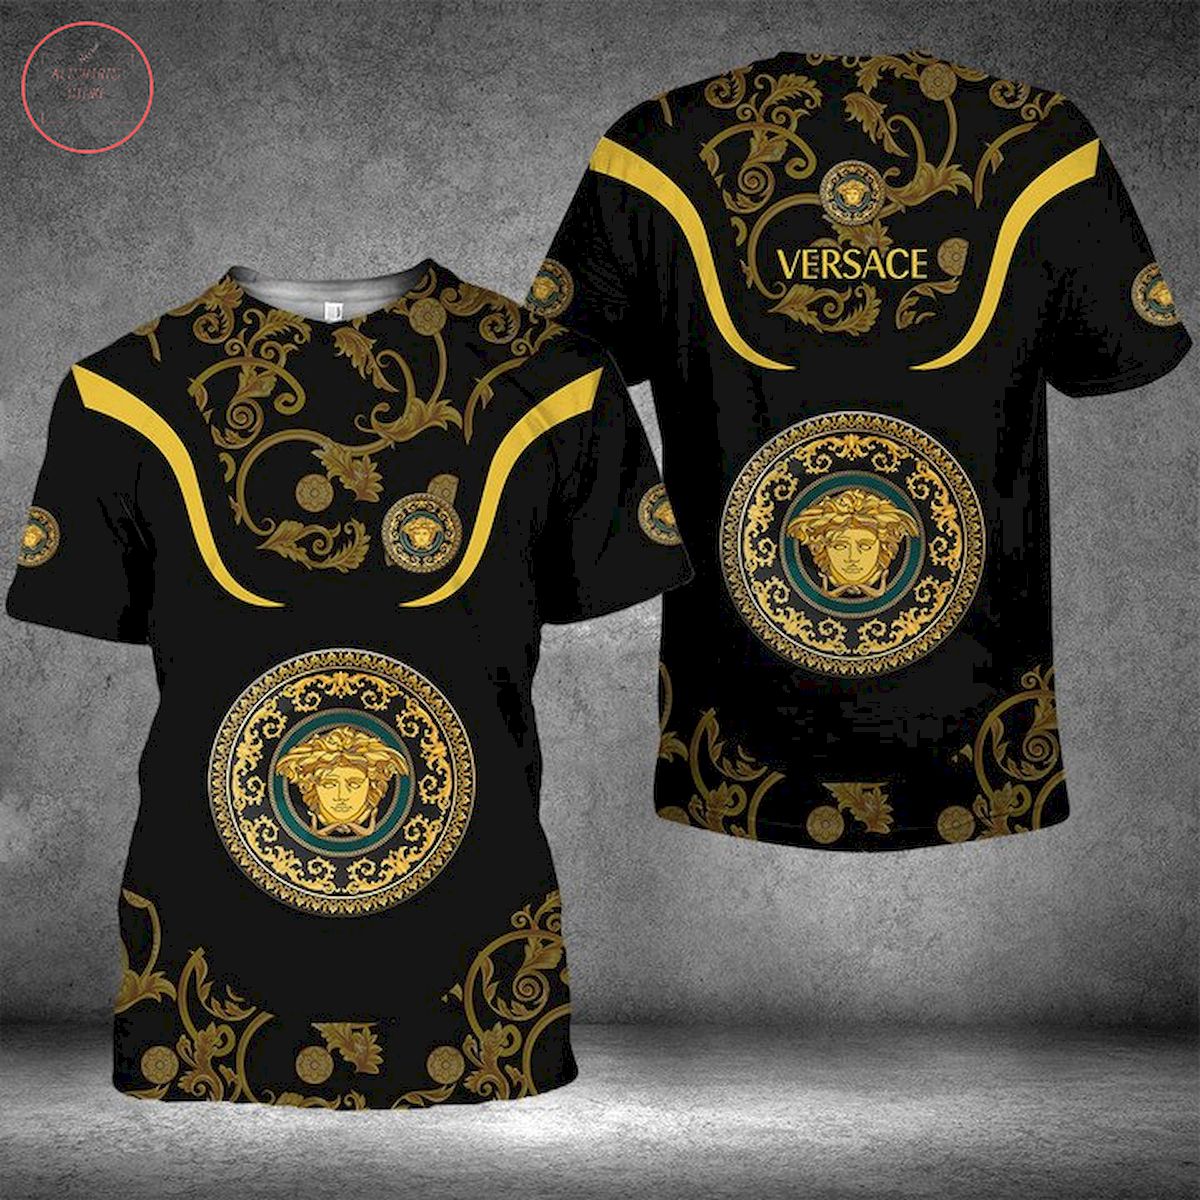 Versace Medusa Luxury Brand All Over Printed Shirt